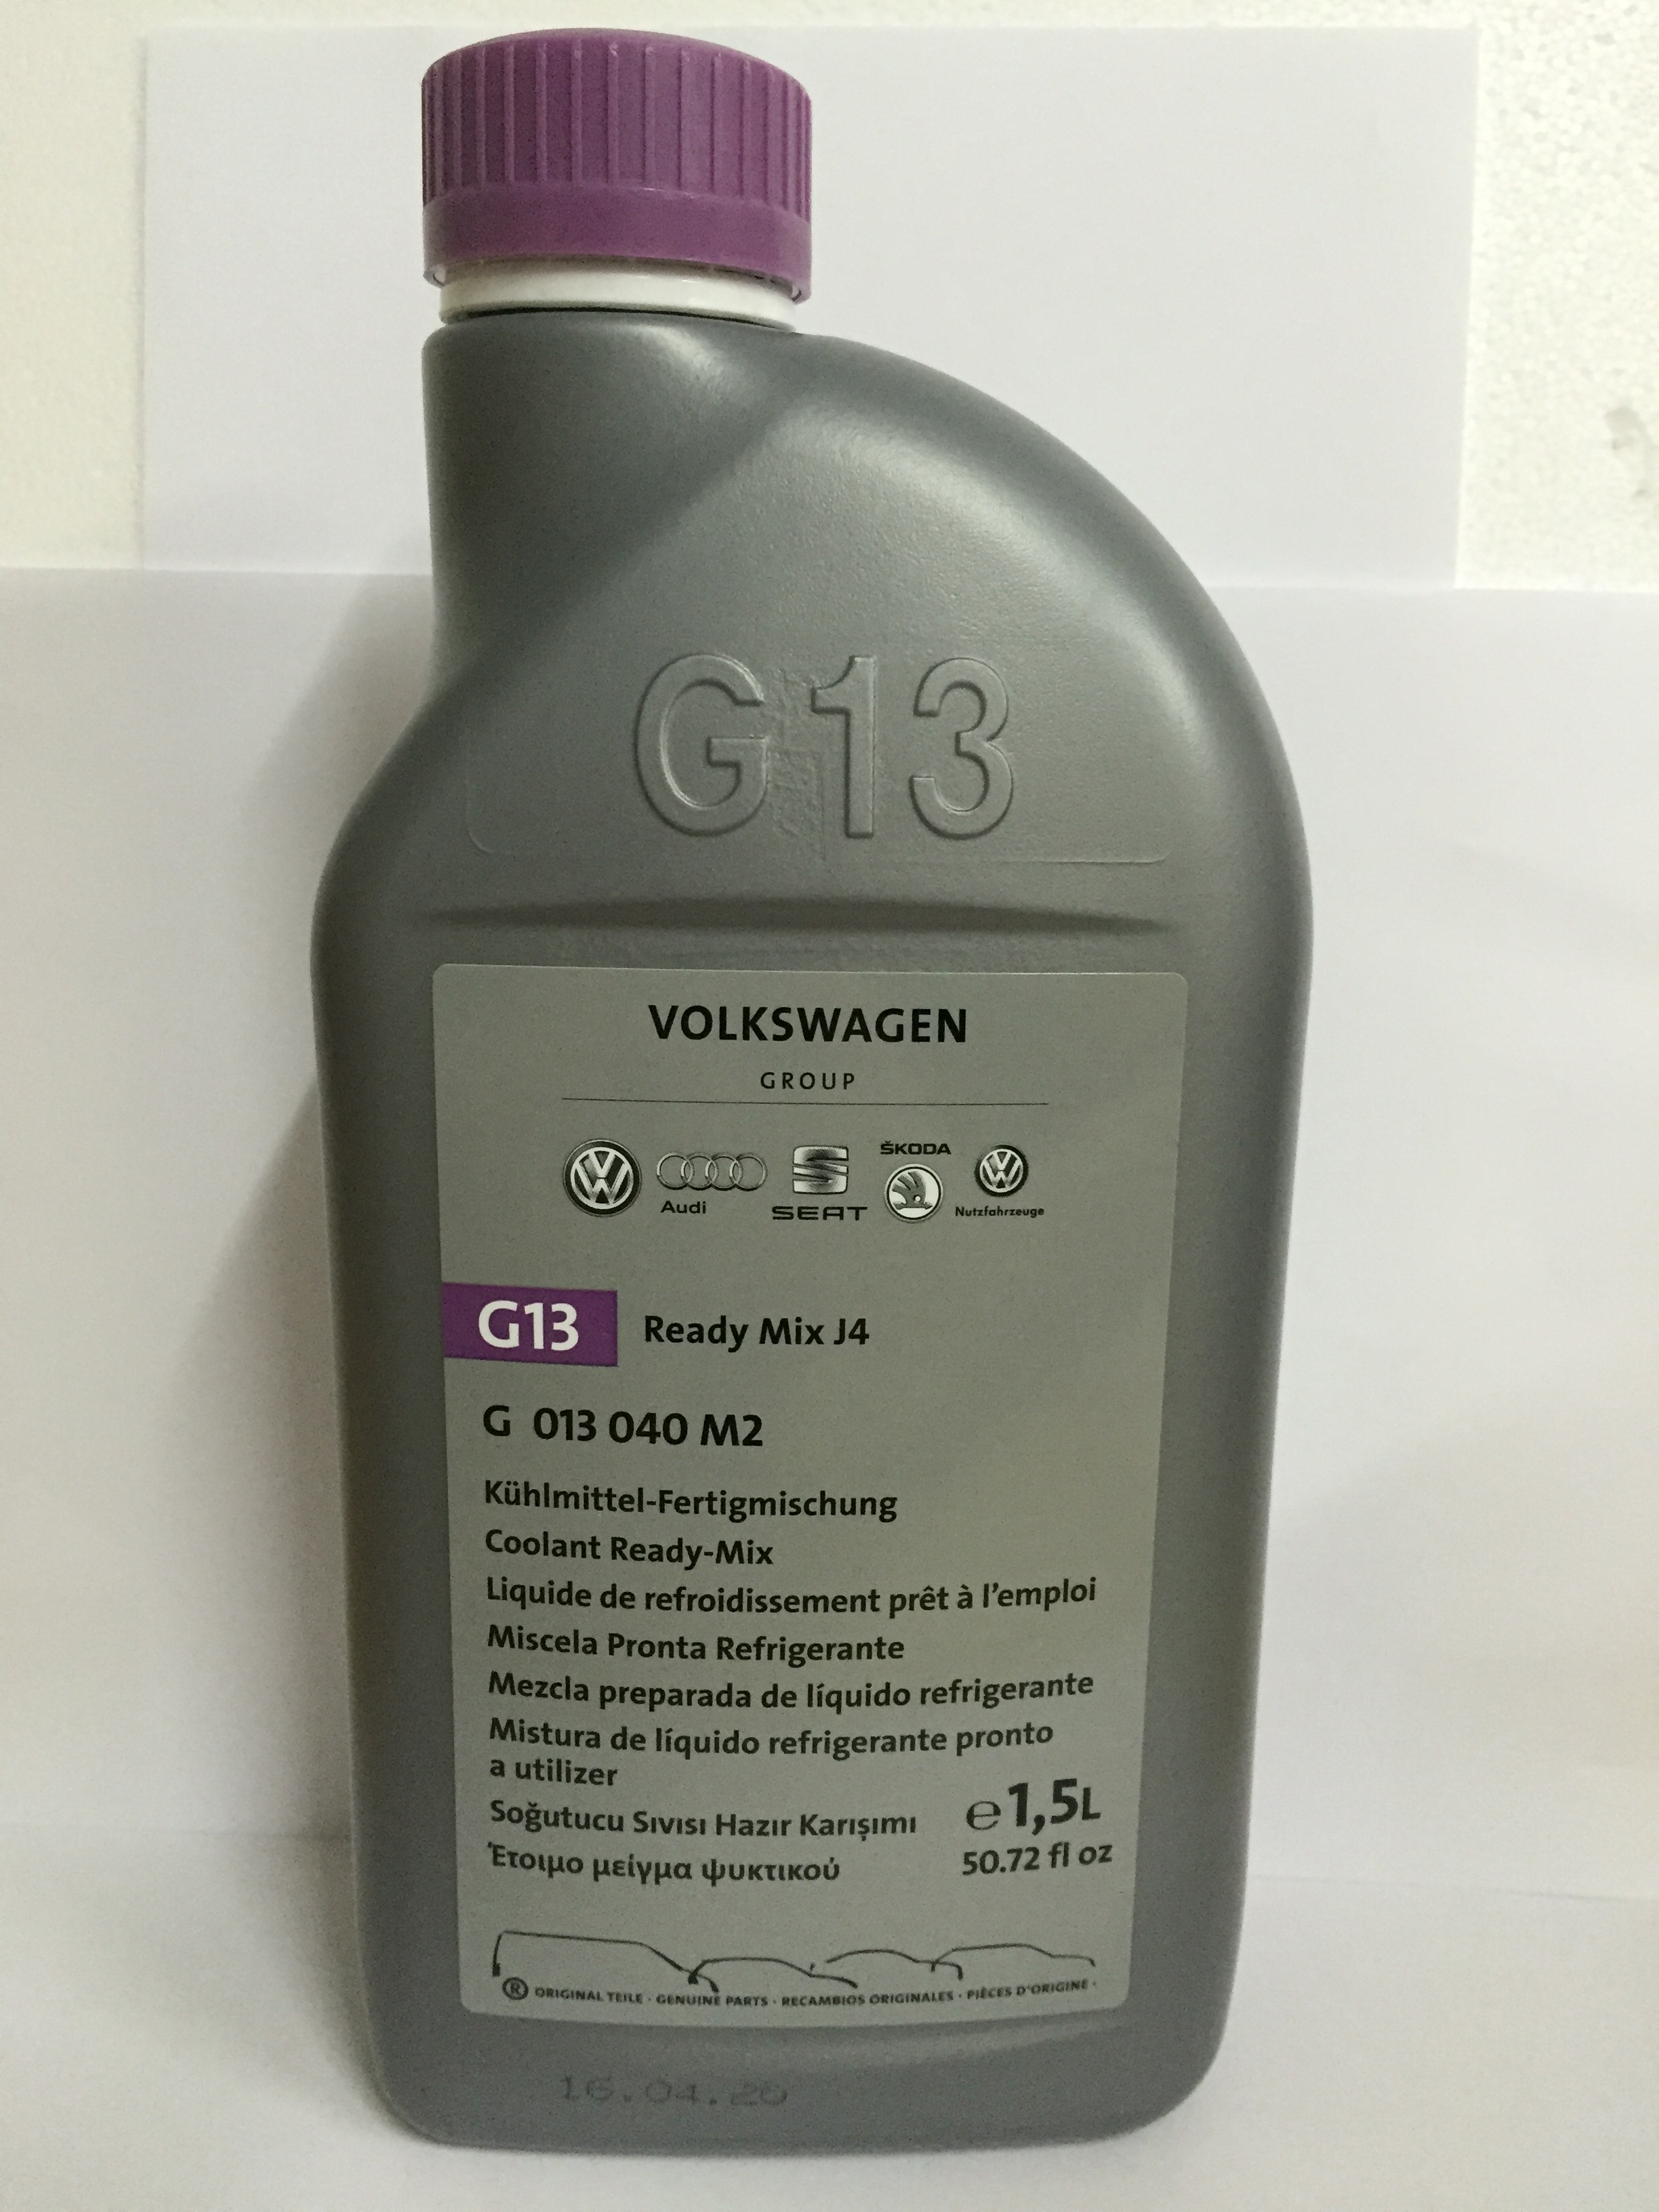 Rodet Aske hierarki OilandParts - VW Kühlmittelzusatz G13 Ready Mix G013 040 M5 - 1,5 Liter